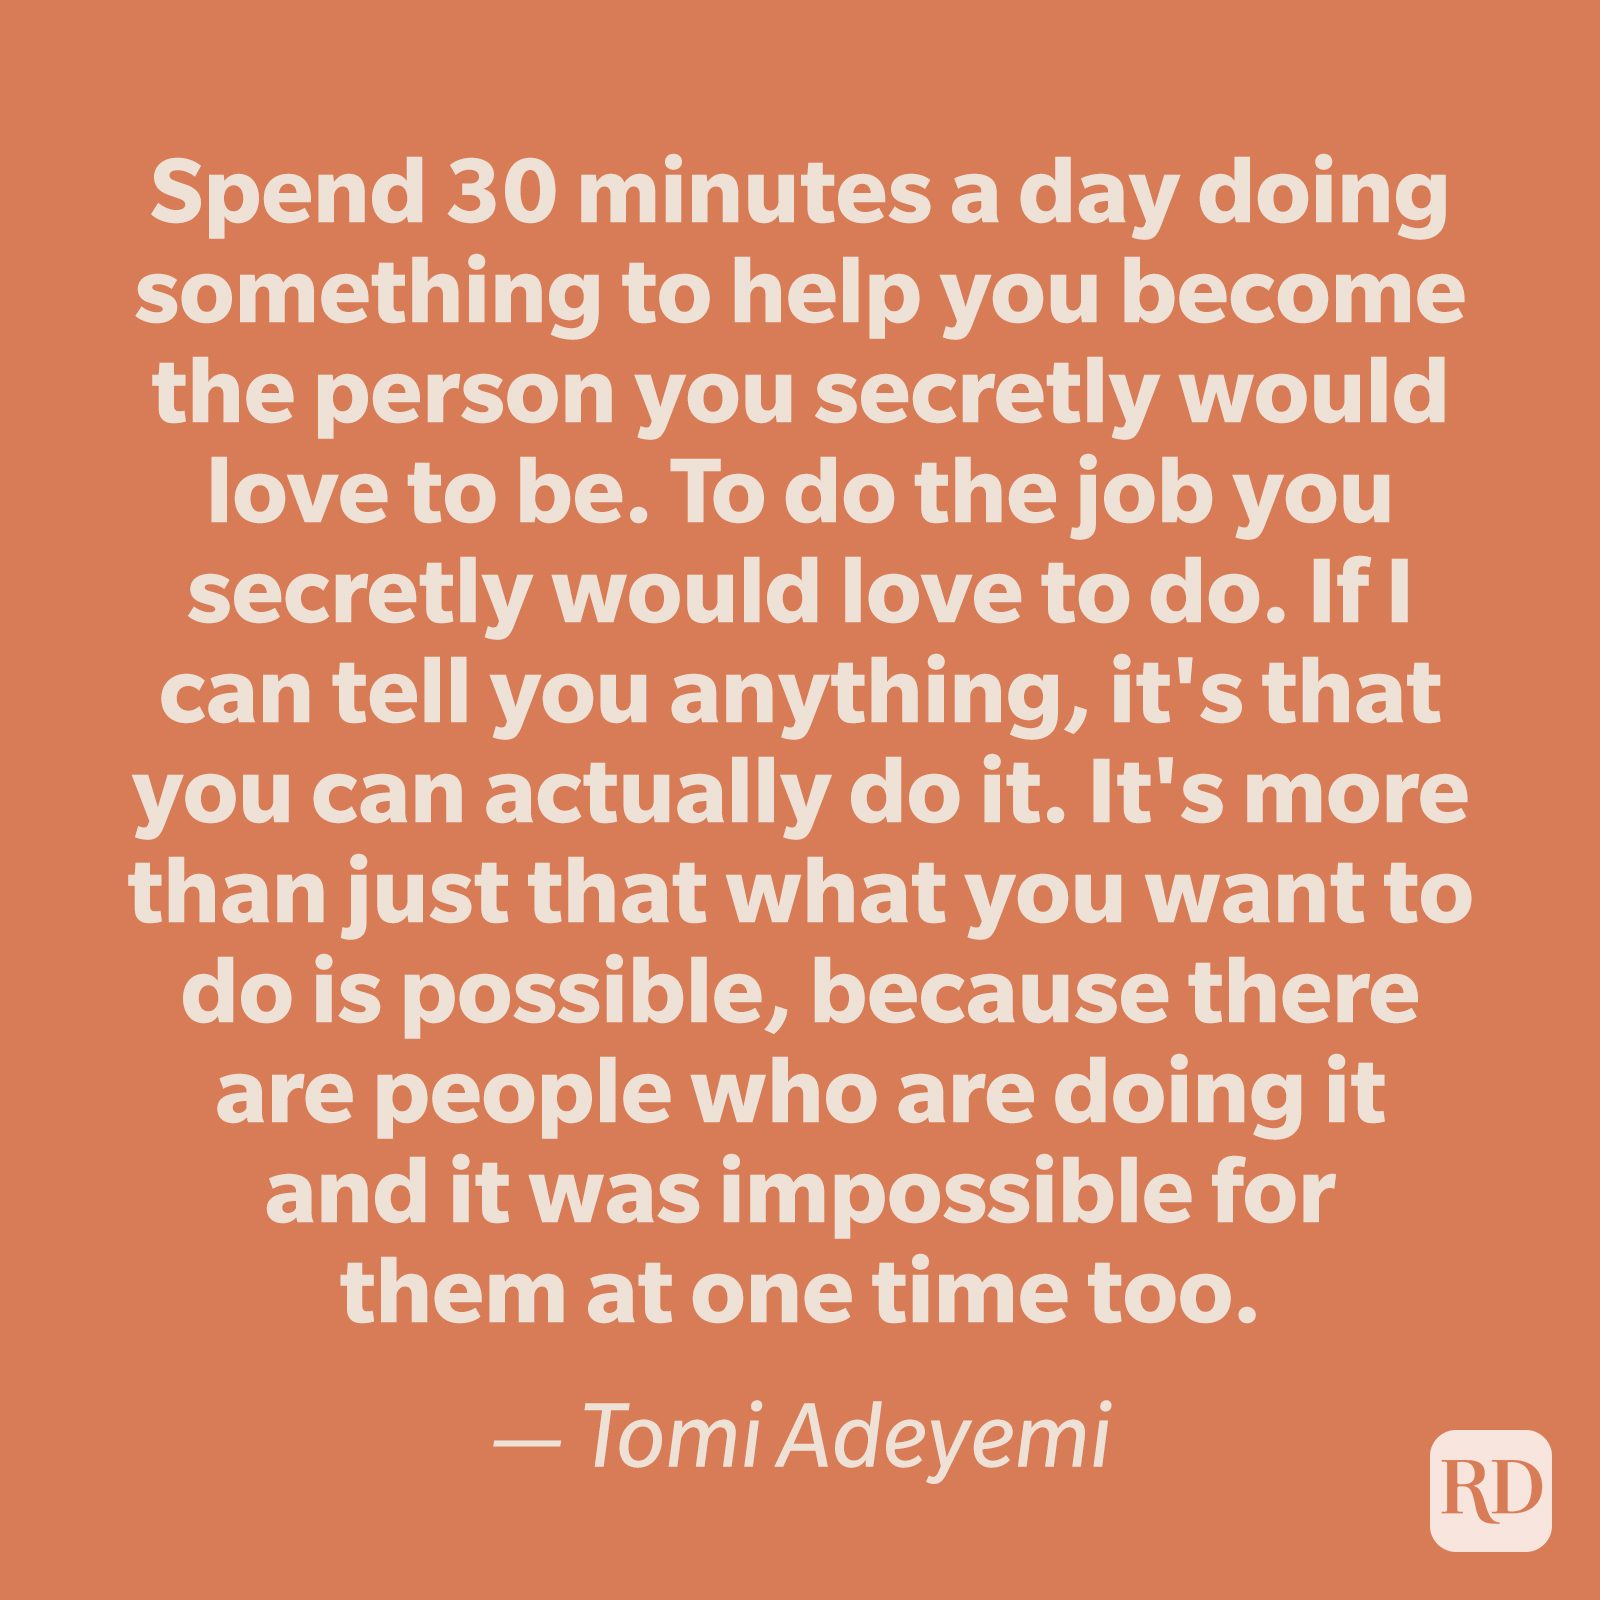 Tomi Adeyemi quote